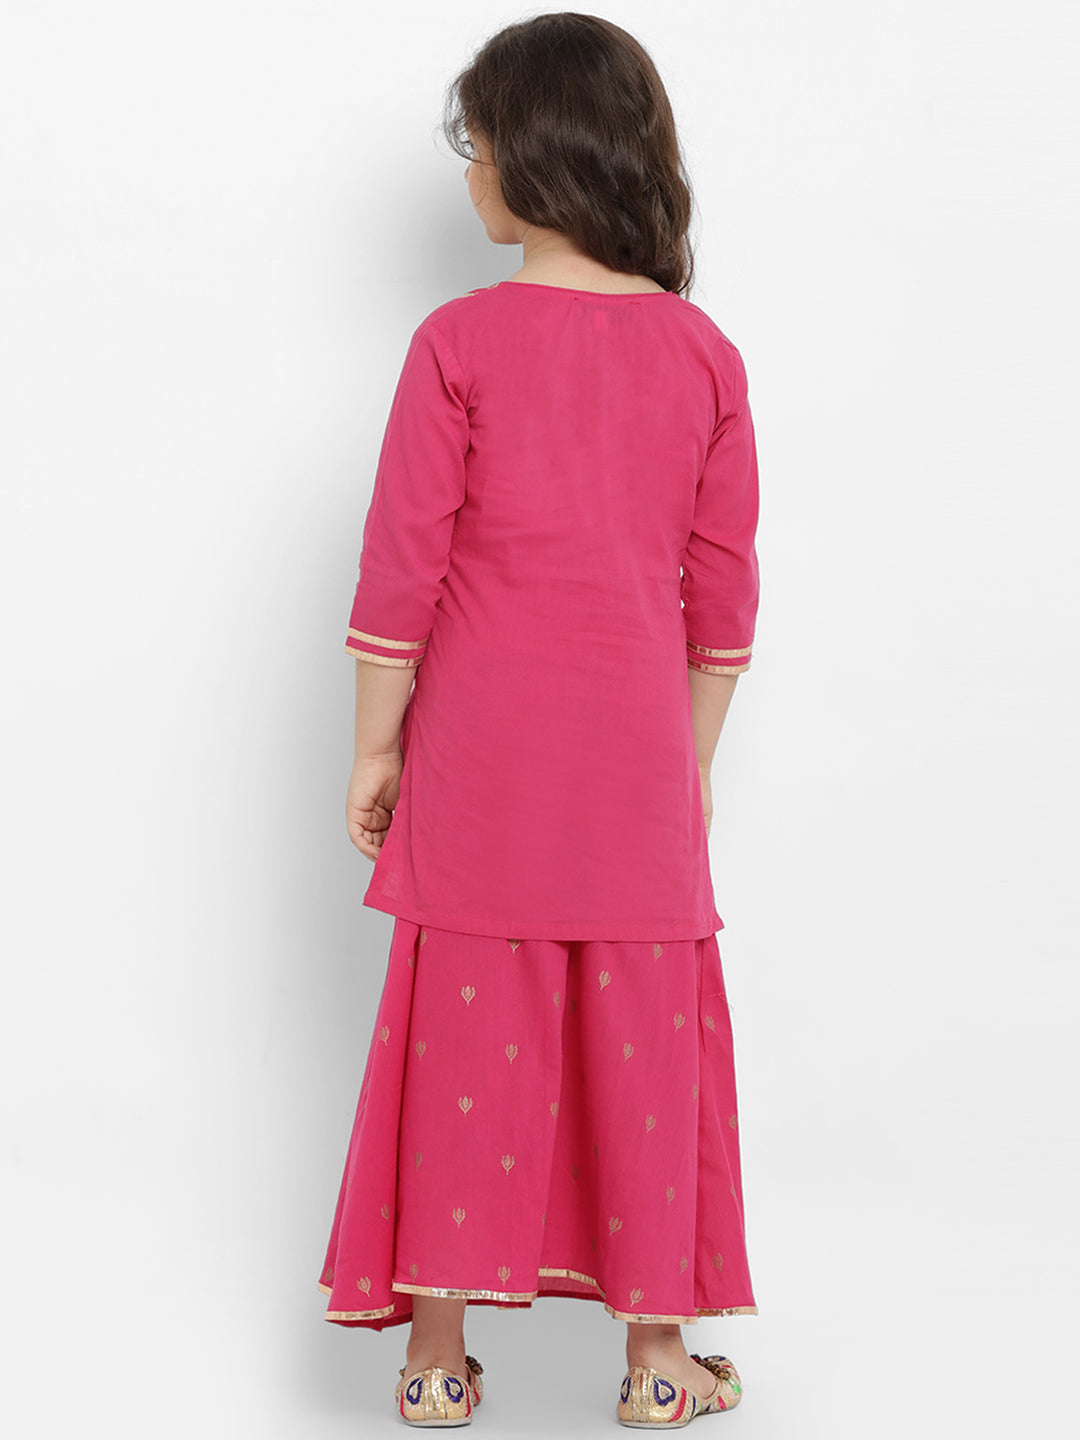 Bitiya by Bhama Girls Pink Solid Kurta with Skirt